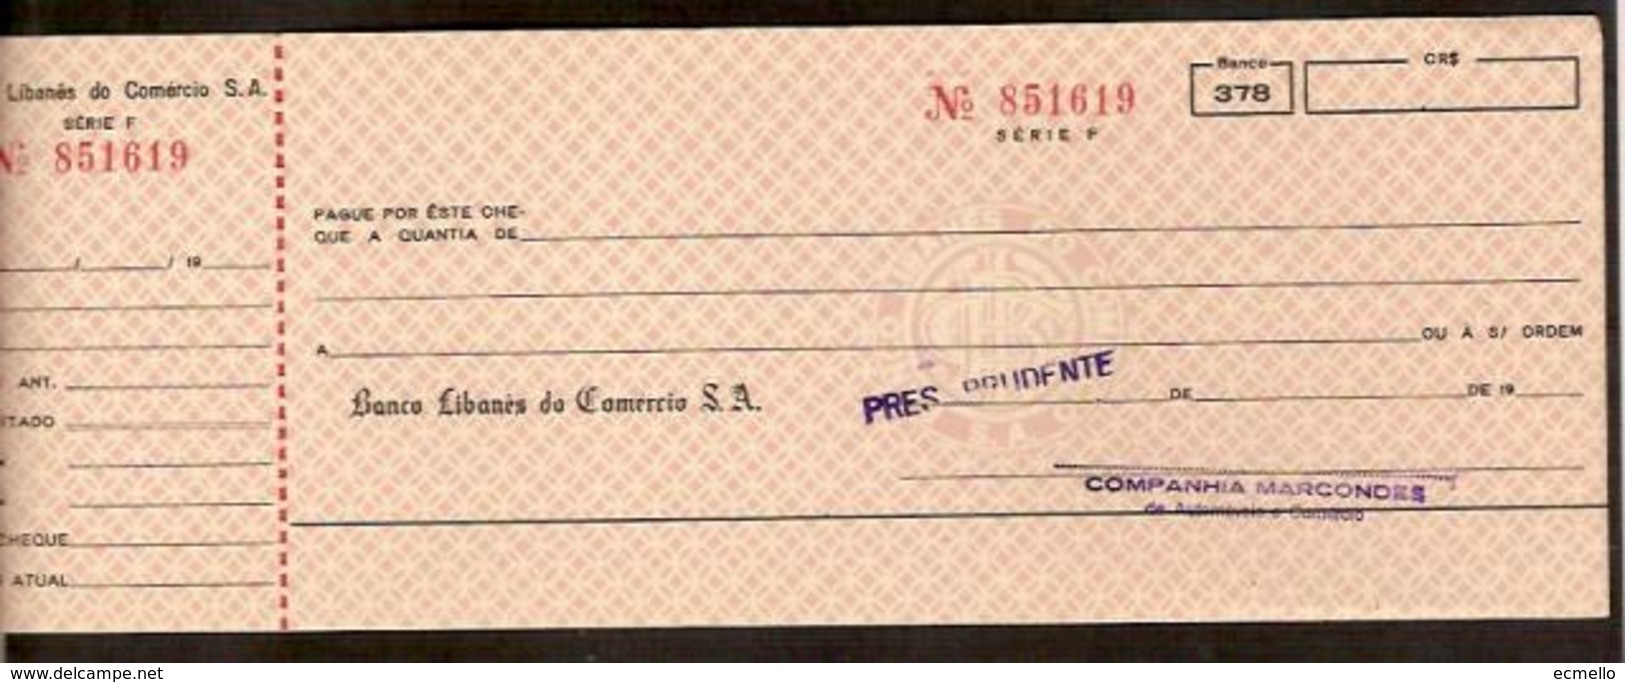 CH299  CHEQUE BANCO LIBANÊS DO COMÉRCIO AG. PRES. PRUDENTE 1960'S NCR$ LEBANESE BANK - Cheques & Traveler's Cheques